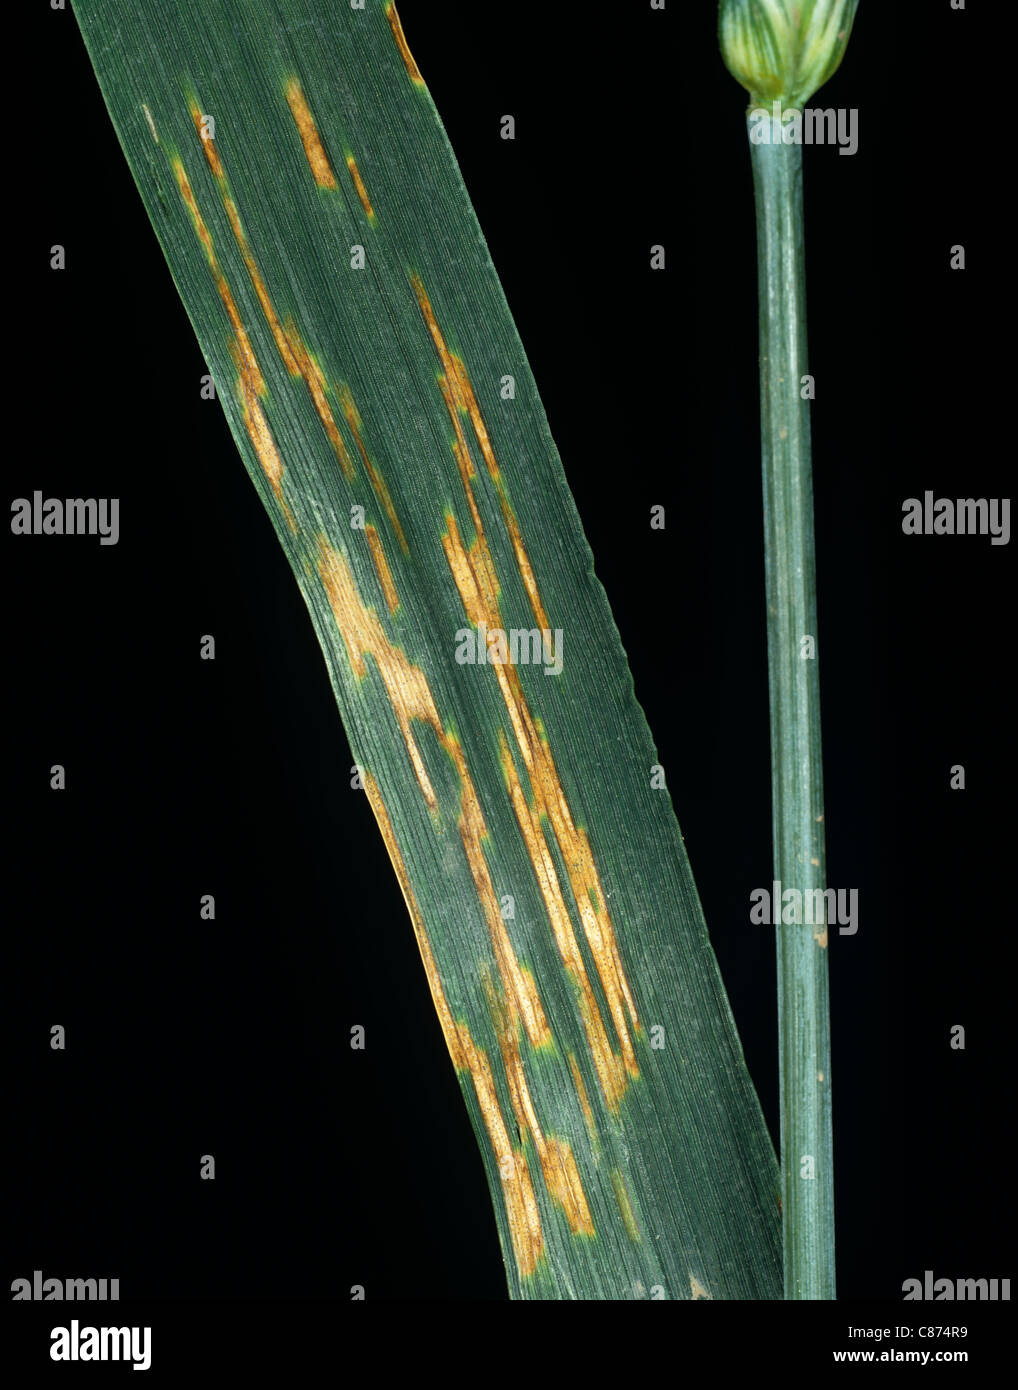 Septoria leaf spot (Zymoseptoria tritici (syn. Mycosphaerella graminicola) on wheat Stock Photo